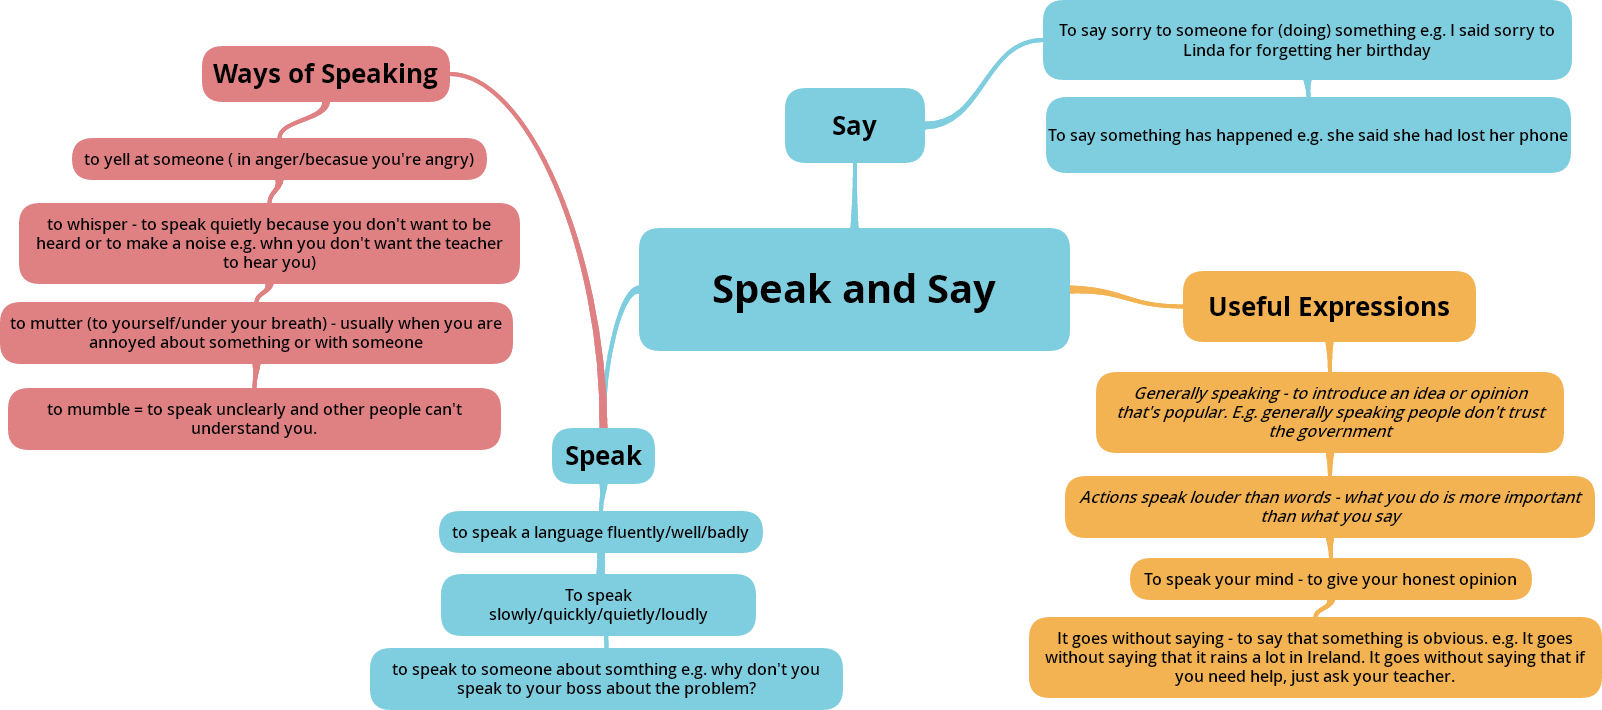 Ways of speaking. Ways of speaking in English. Speaking of или speaking about. Generally speaking. Speaking of an ending